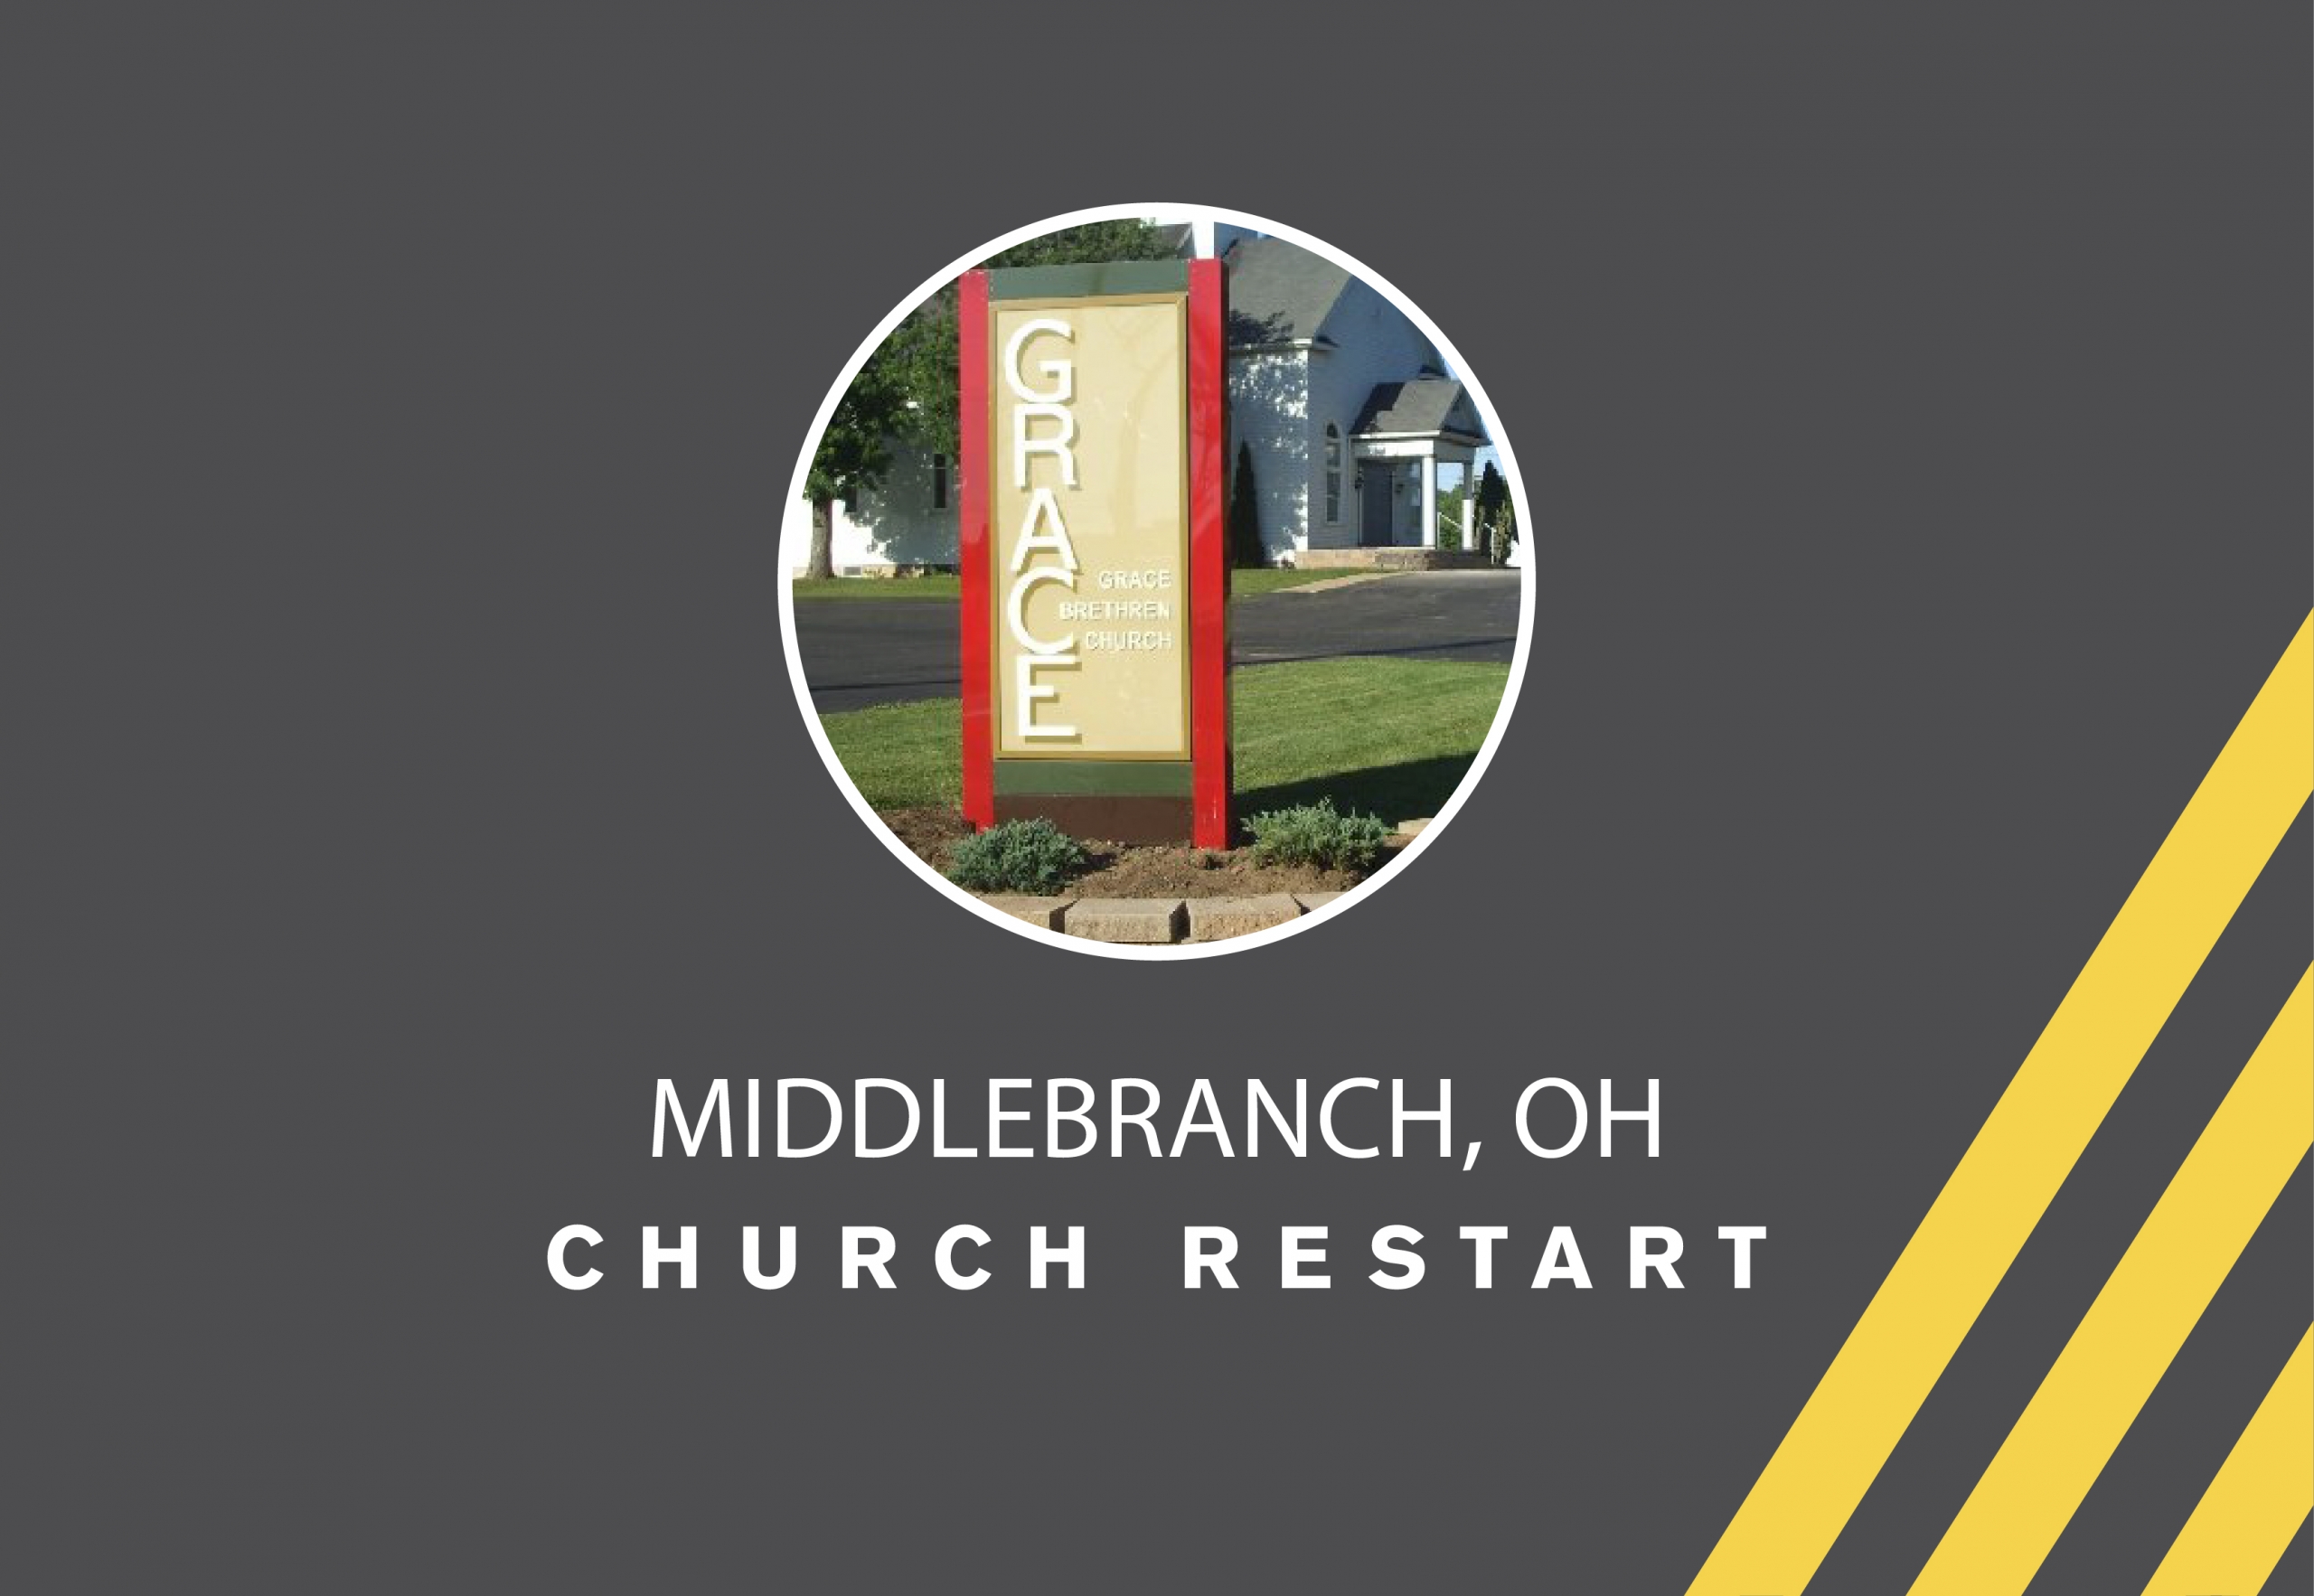 Middlebranch Church Restart